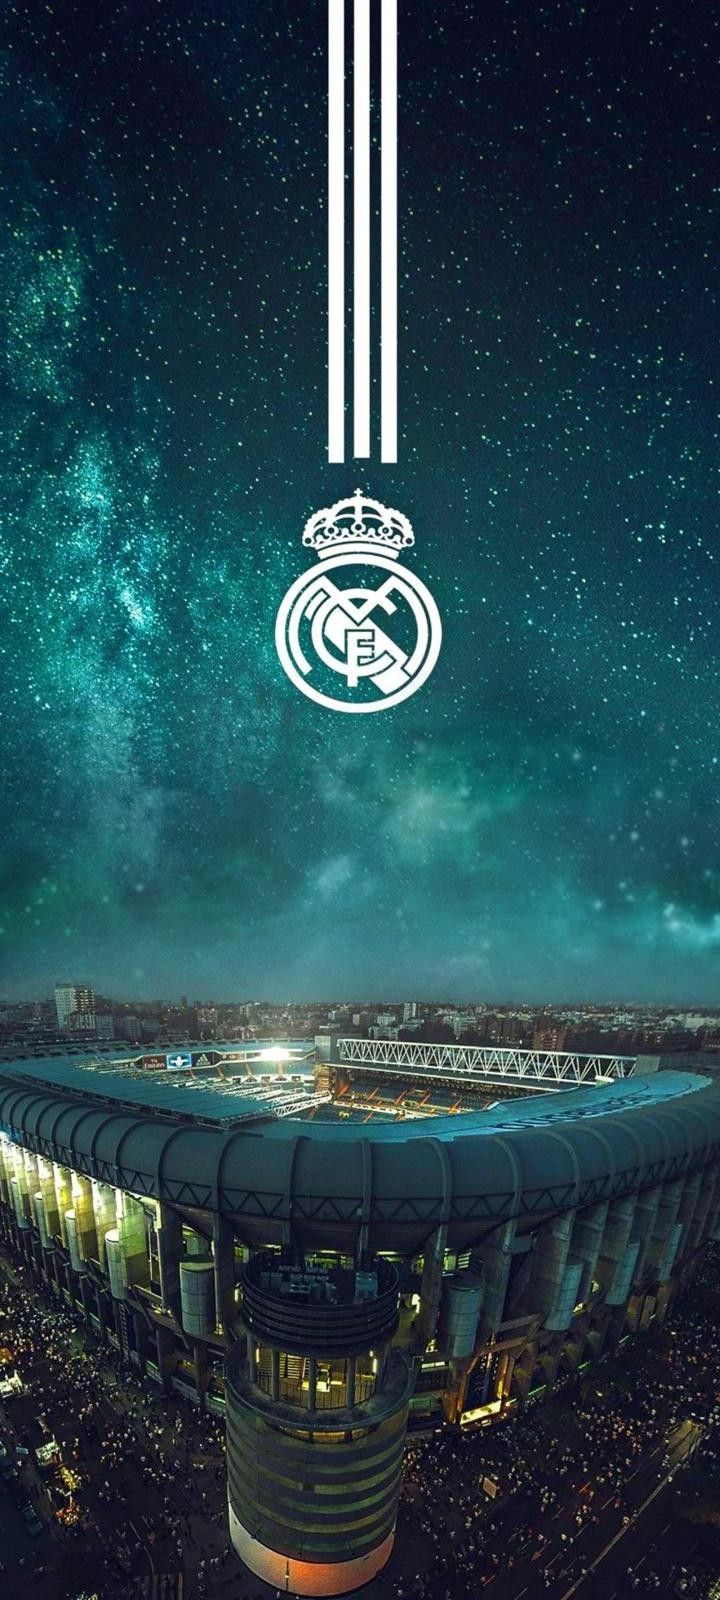 Wallpapers 4k Real Madrid - Real Madrid Logo in 4K Splendor: A Wallpaper Showcase